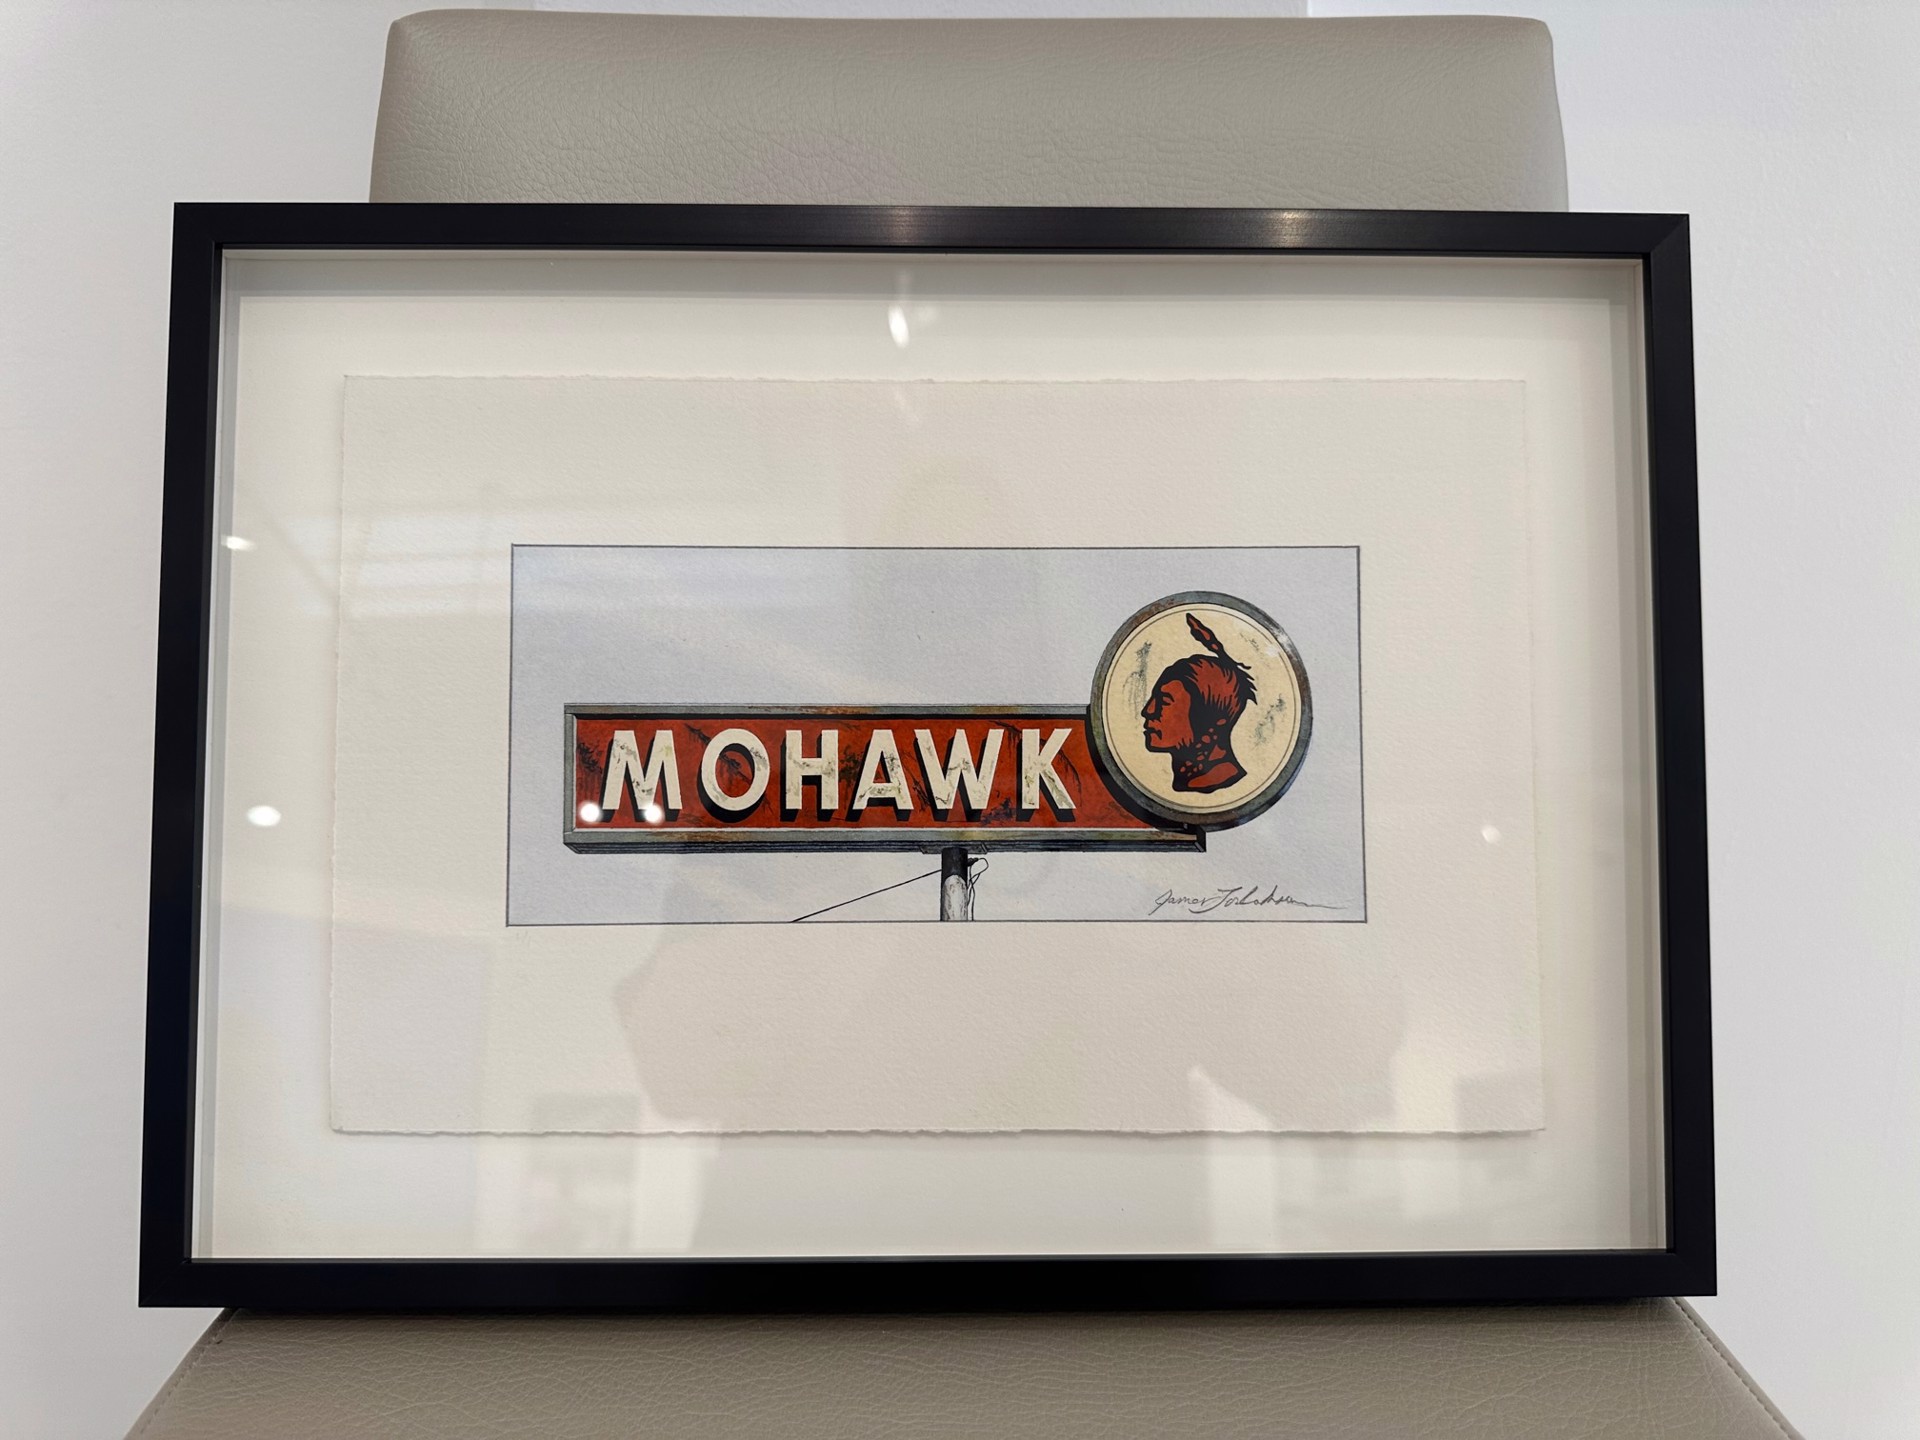 Last Mohawk by James Torlakson